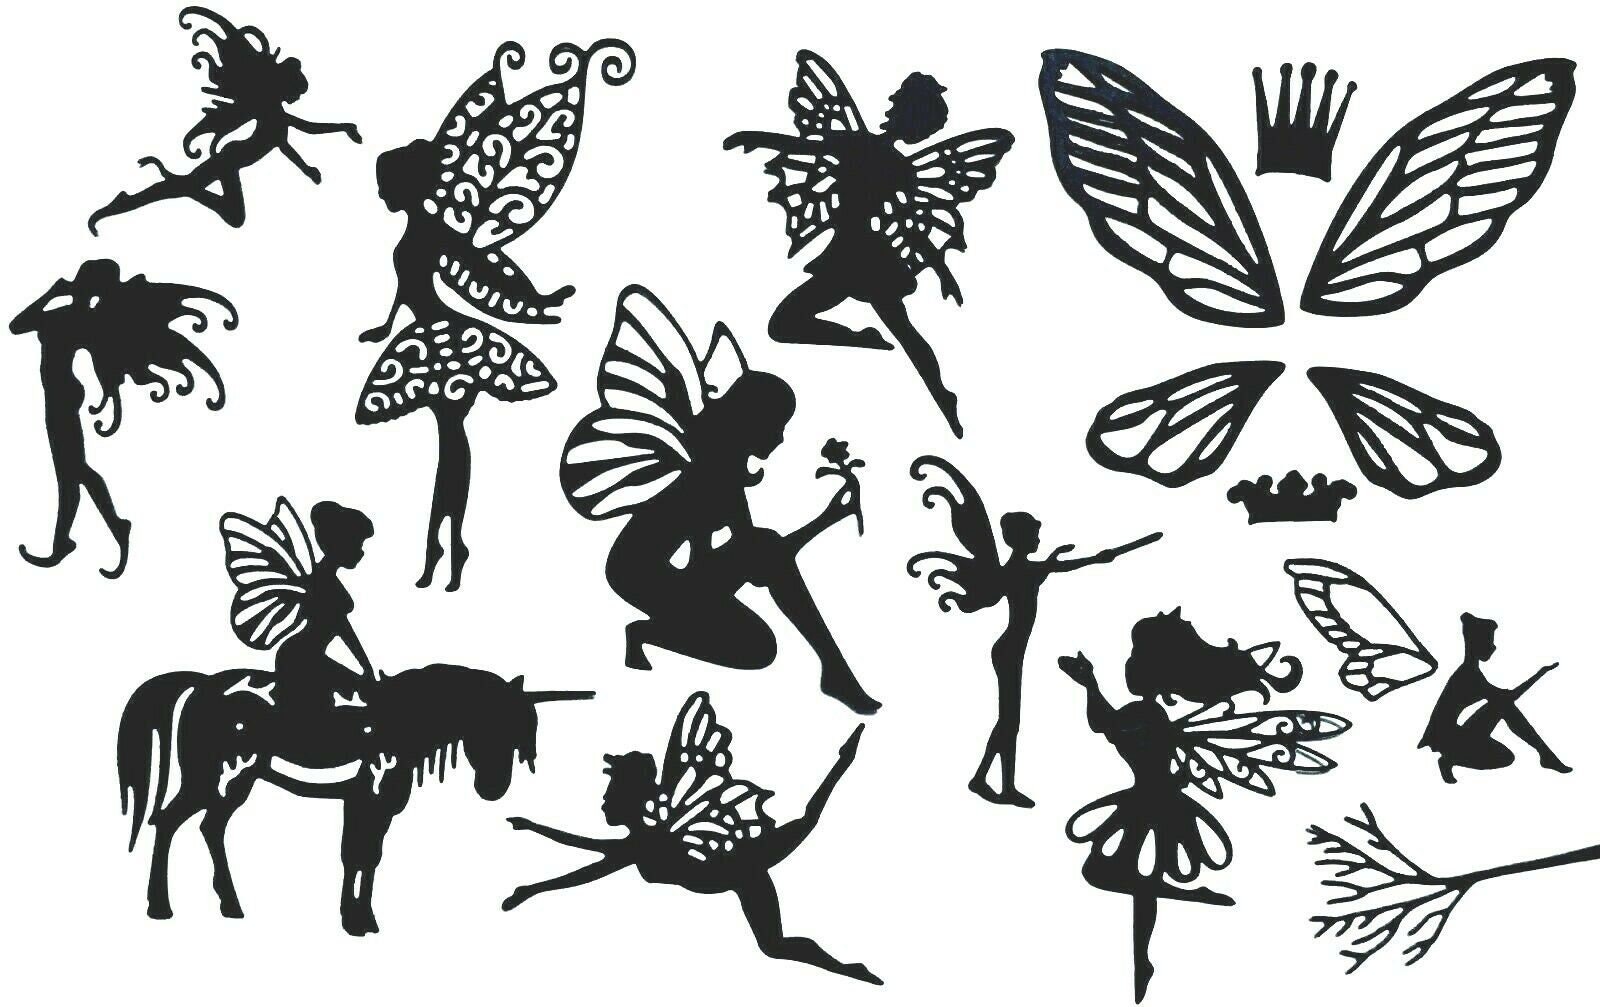 Jar Lantern #4646 6-8 Fairy Fairies Fancy Wing Die-Cut Embellishment Precut Silhouette Cards